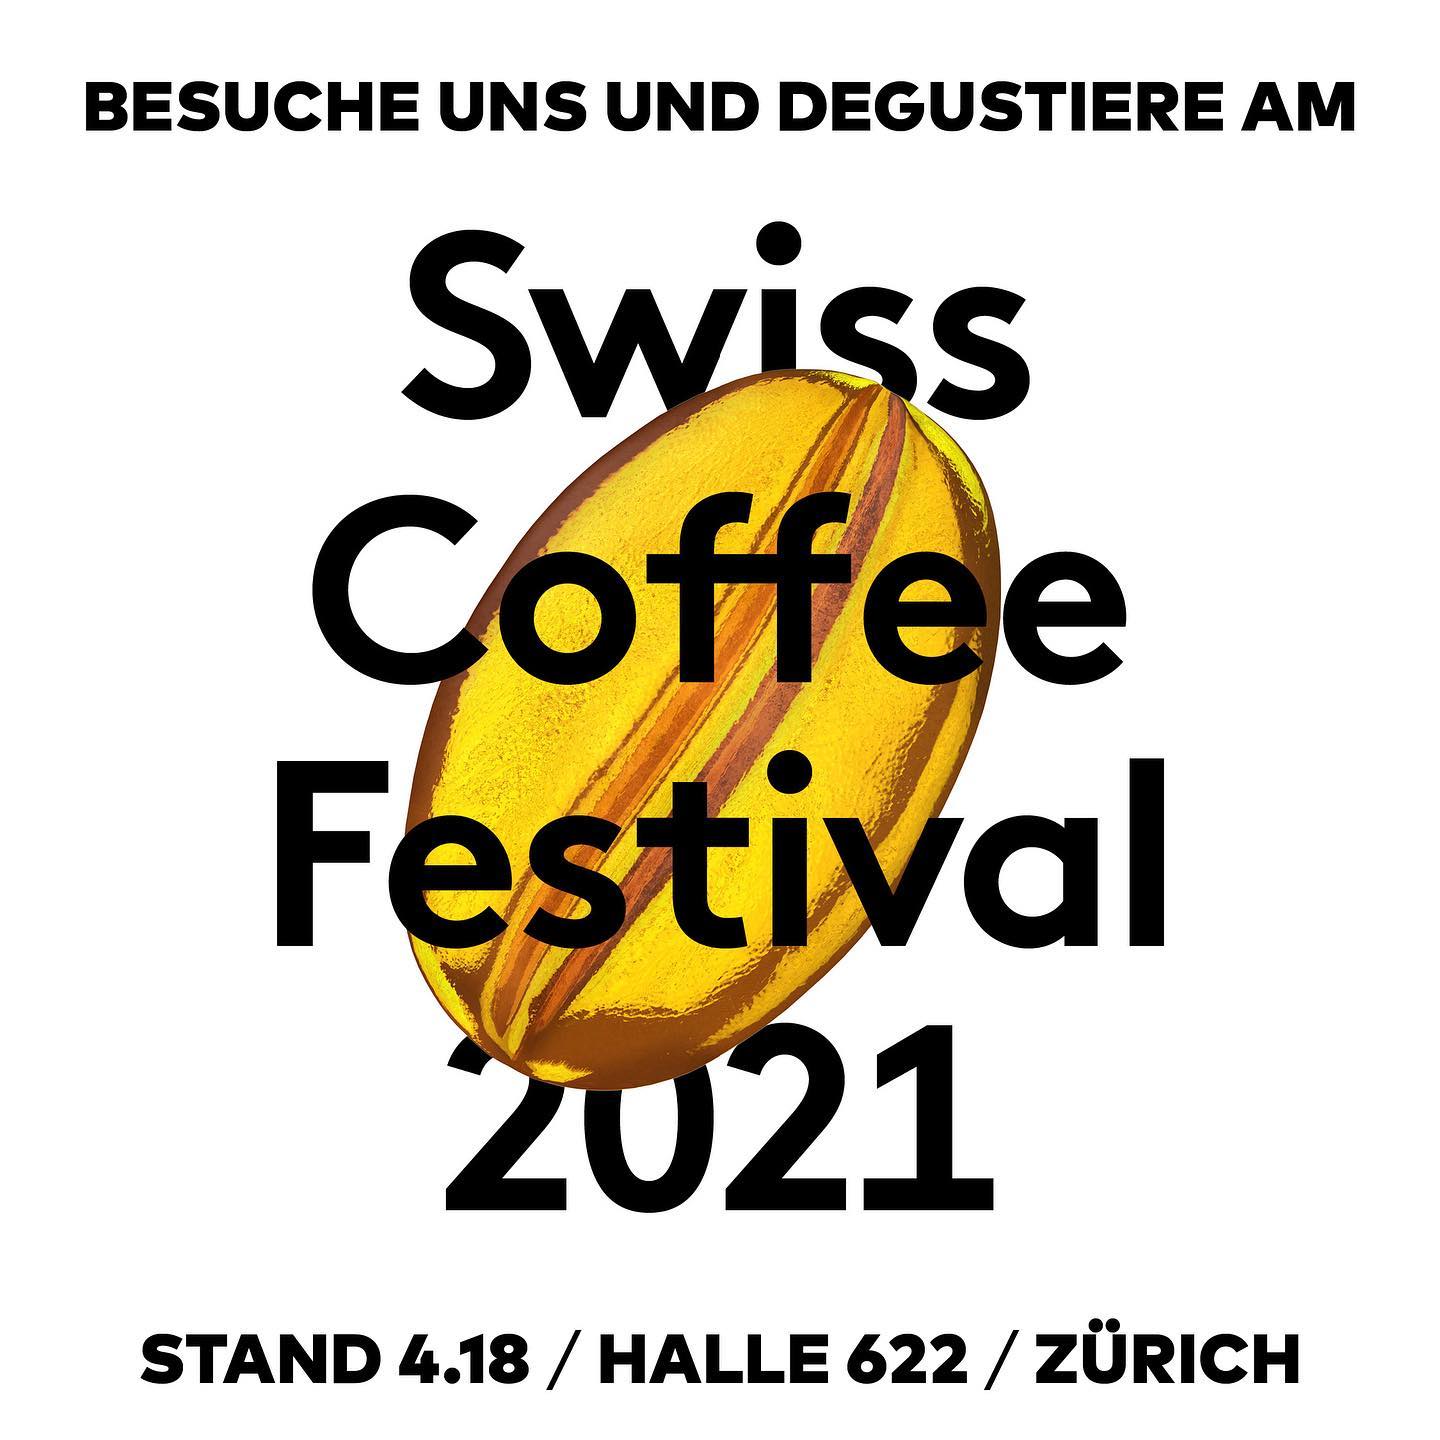 am #swisscoffeefestival
Stand 4.18 / Halle 622 / ZÜRICH3 — 5 SEPTEMBER 2021 —> LinkInBIO
.
#swisssca #swisscoffeechallenge #swisscoffeefestival #challenge #barista #brewing #specialtycoffee #swisssca #specialtycoffeeswitzerland